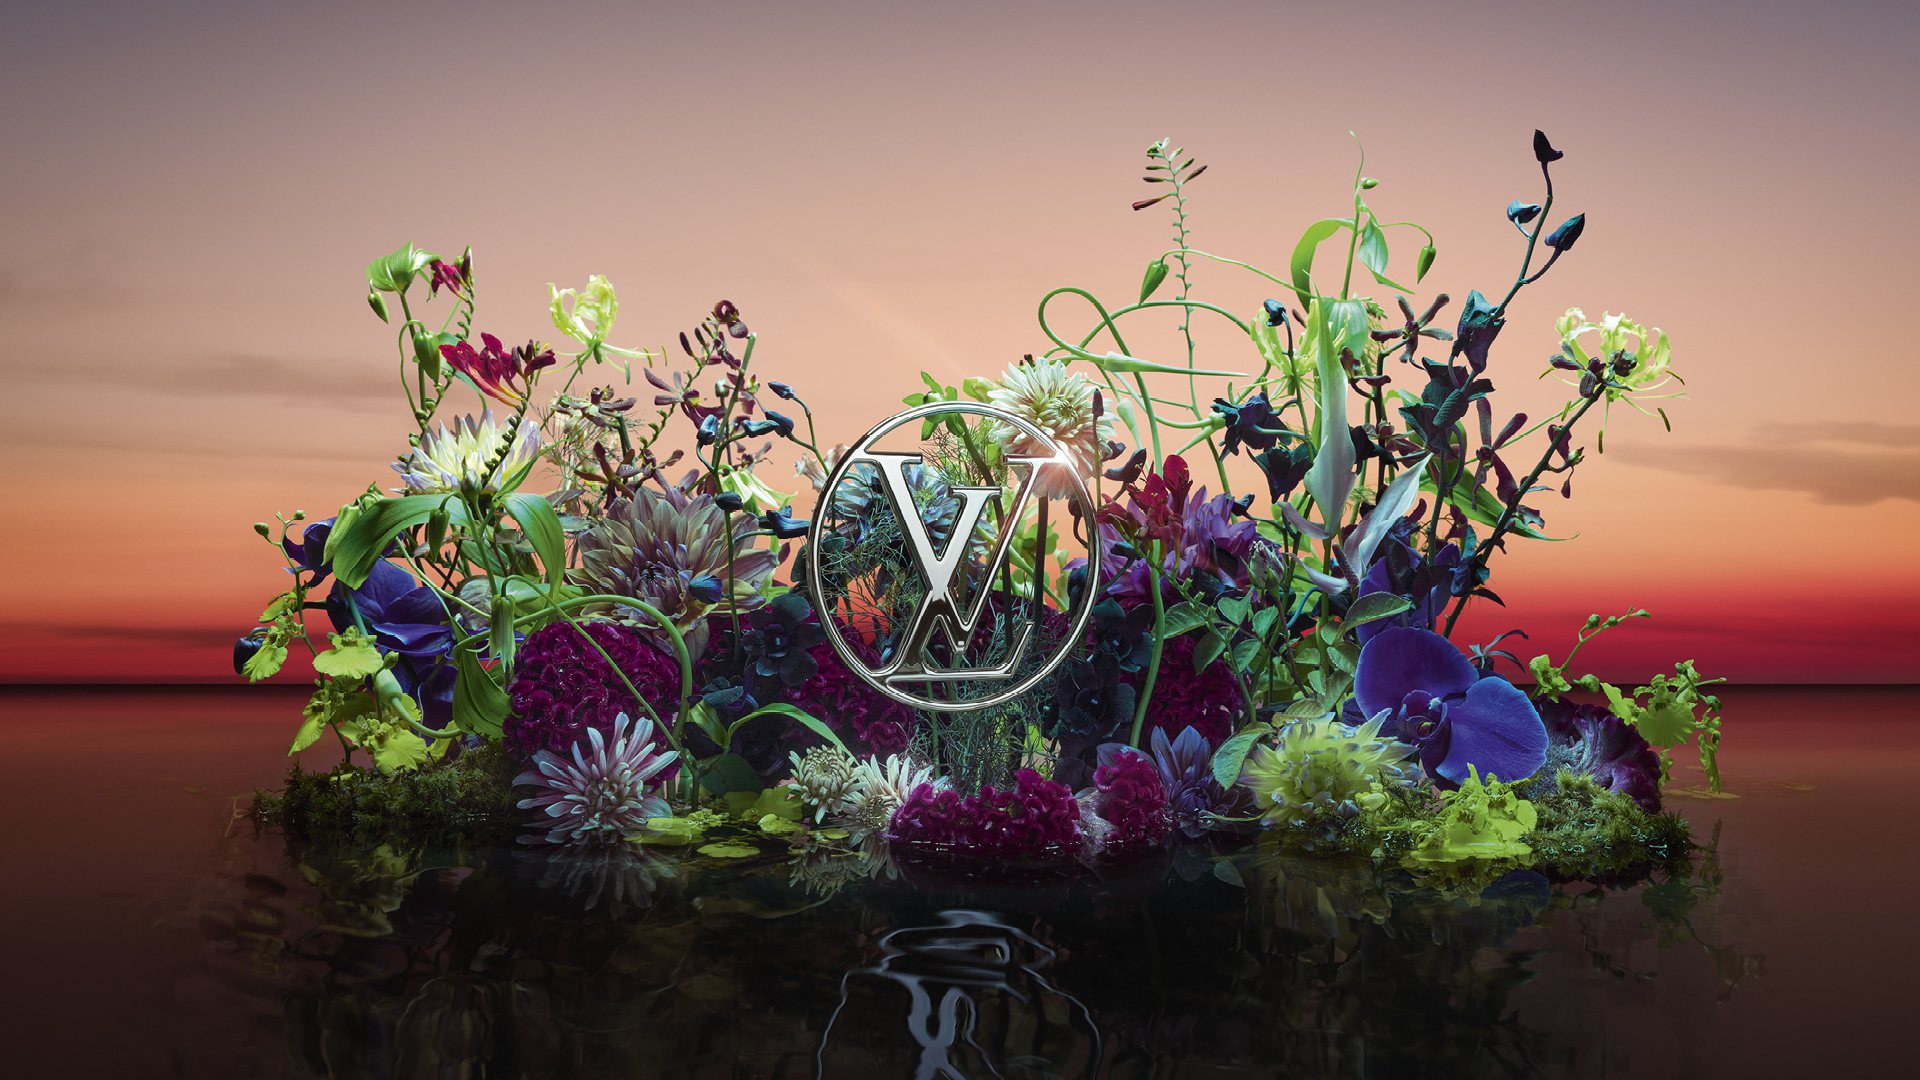 LOUIS VUITTON Imagination perfume review - LV new fragrance 